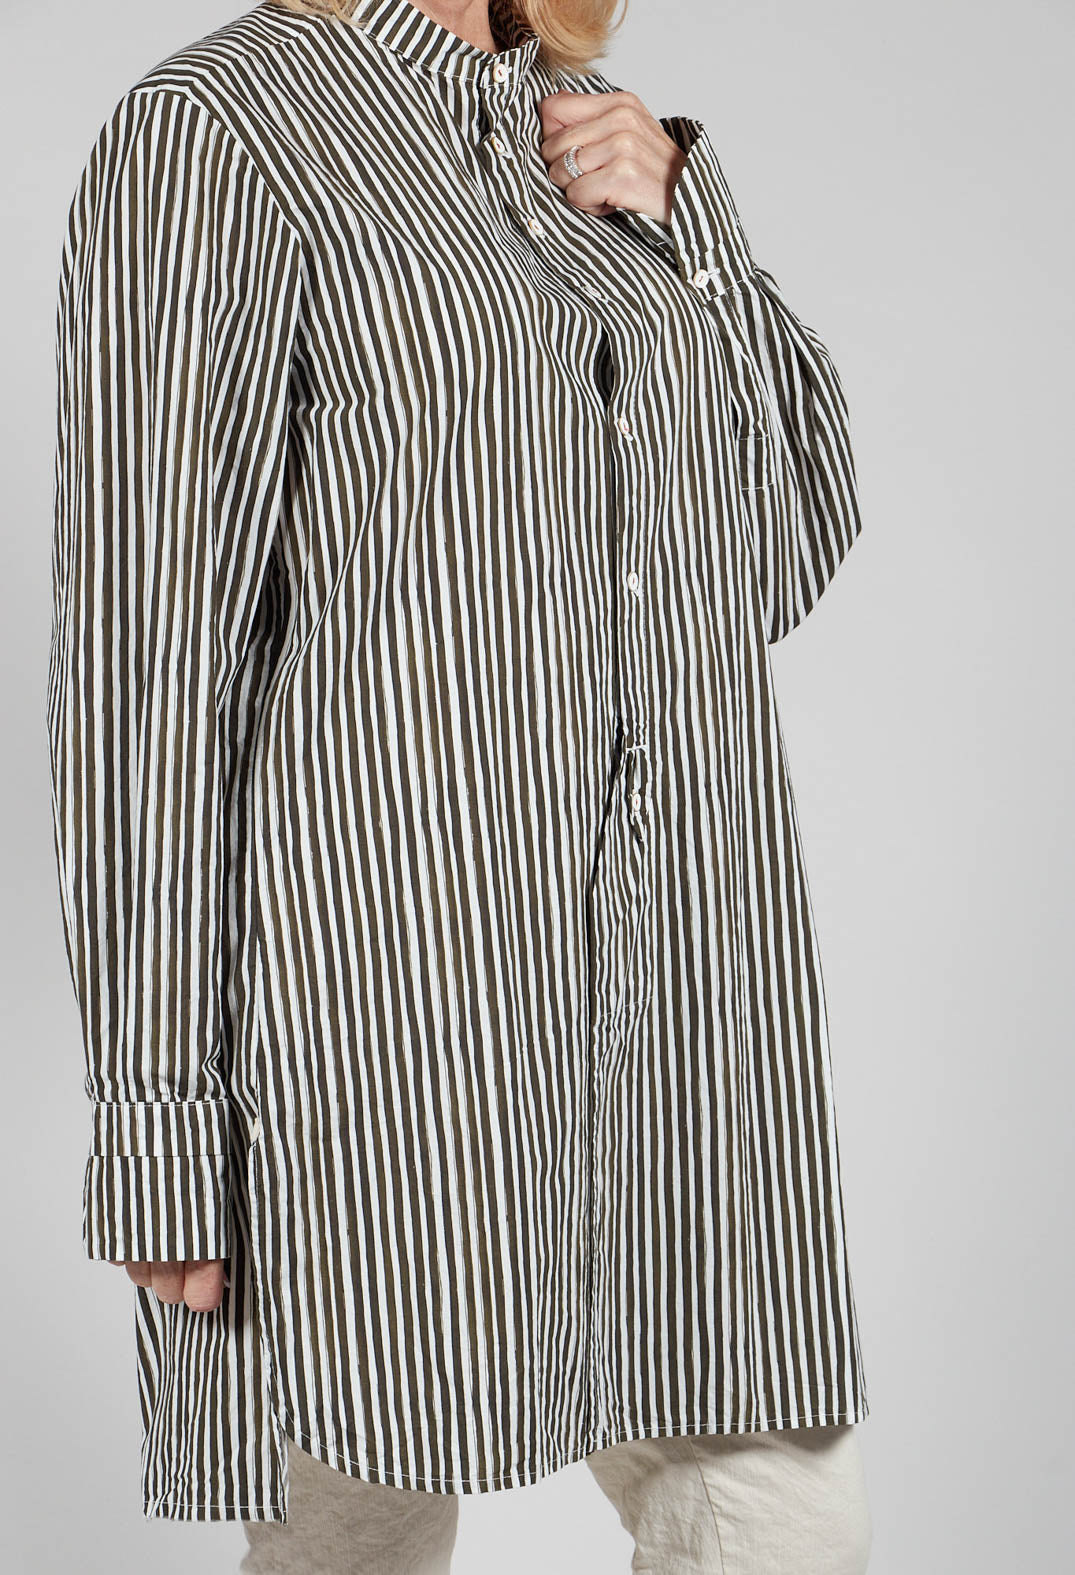 Charles Mens Shirt in Olive Stripes